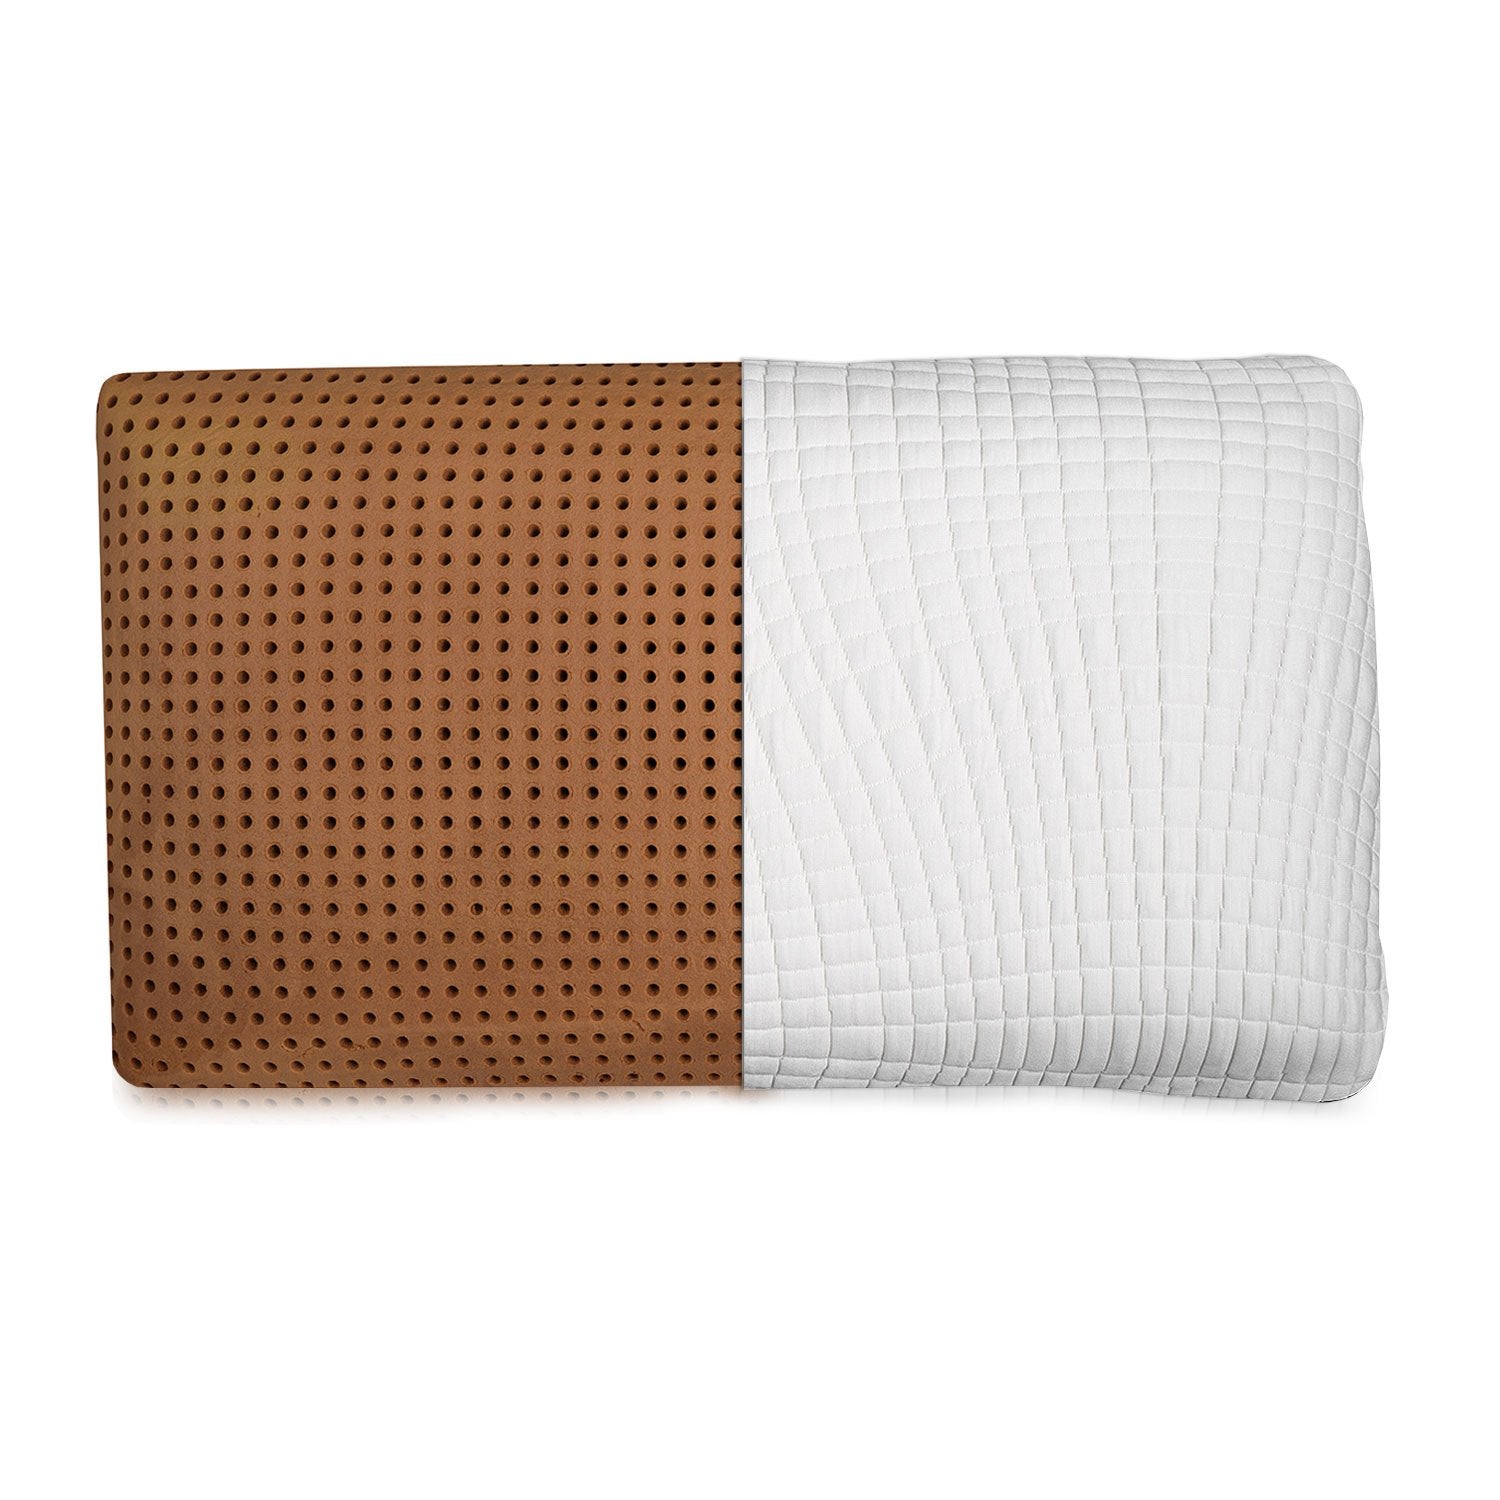 Ventilated Copper Memory Foam Pillow - Washable Cover - zzZensleep